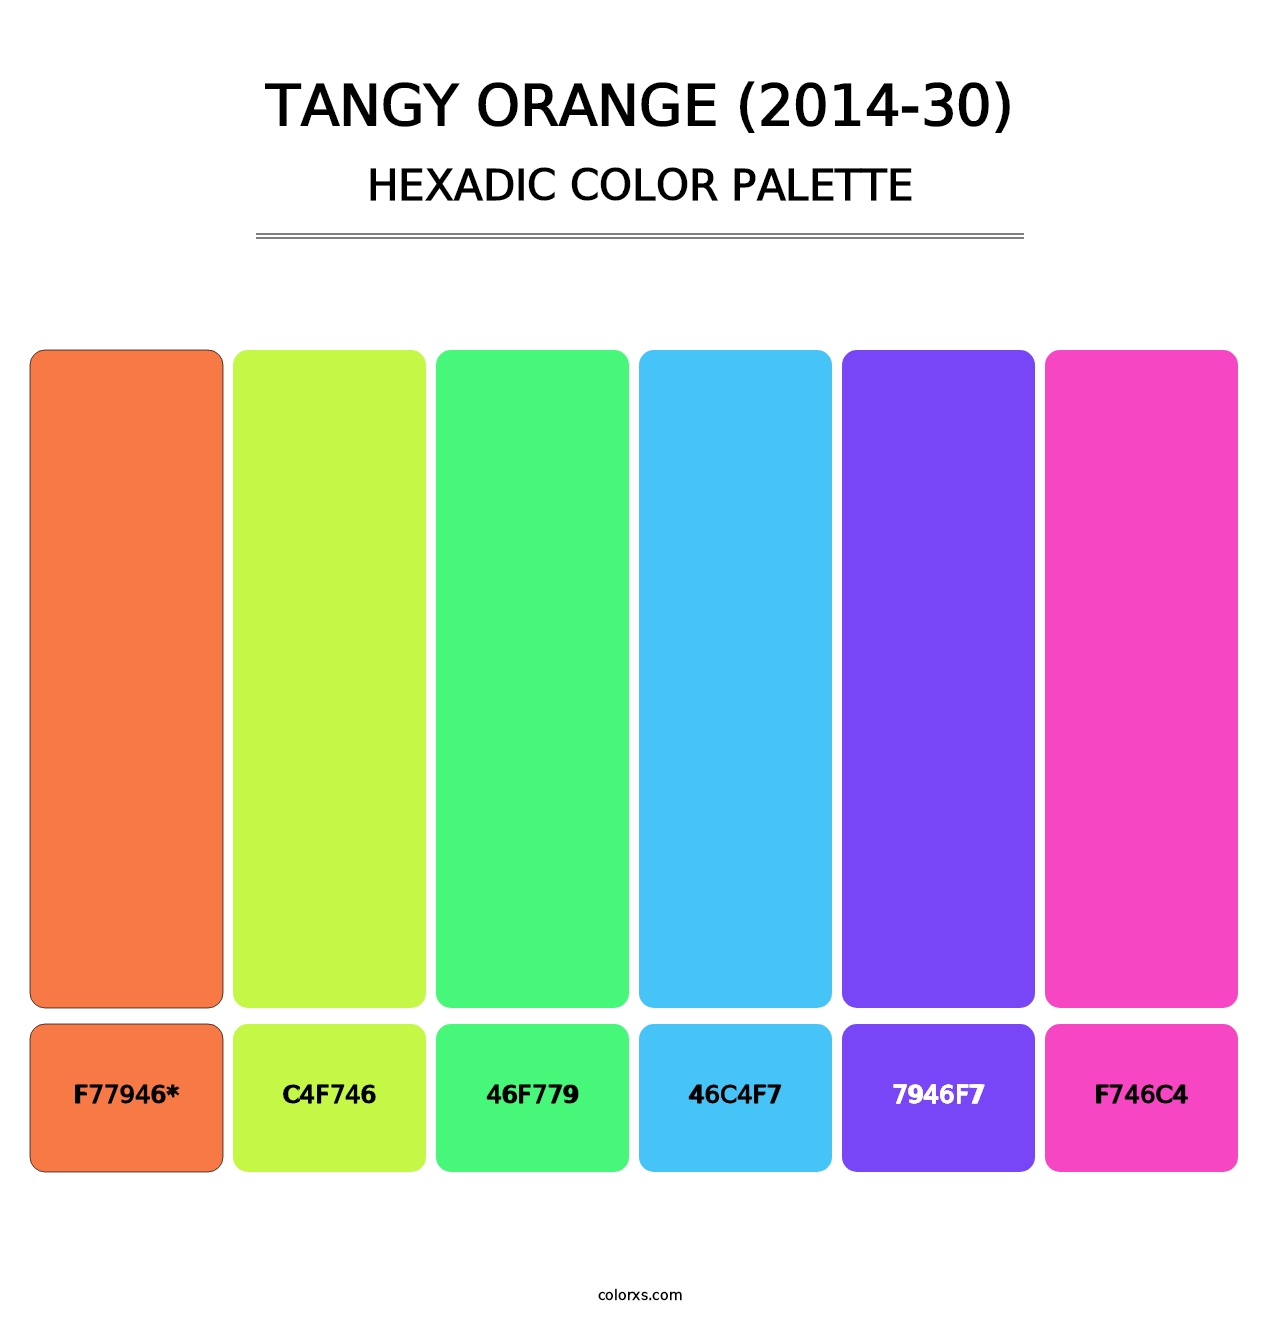 Tangy Orange (2014-30) - Hexadic Color Palette